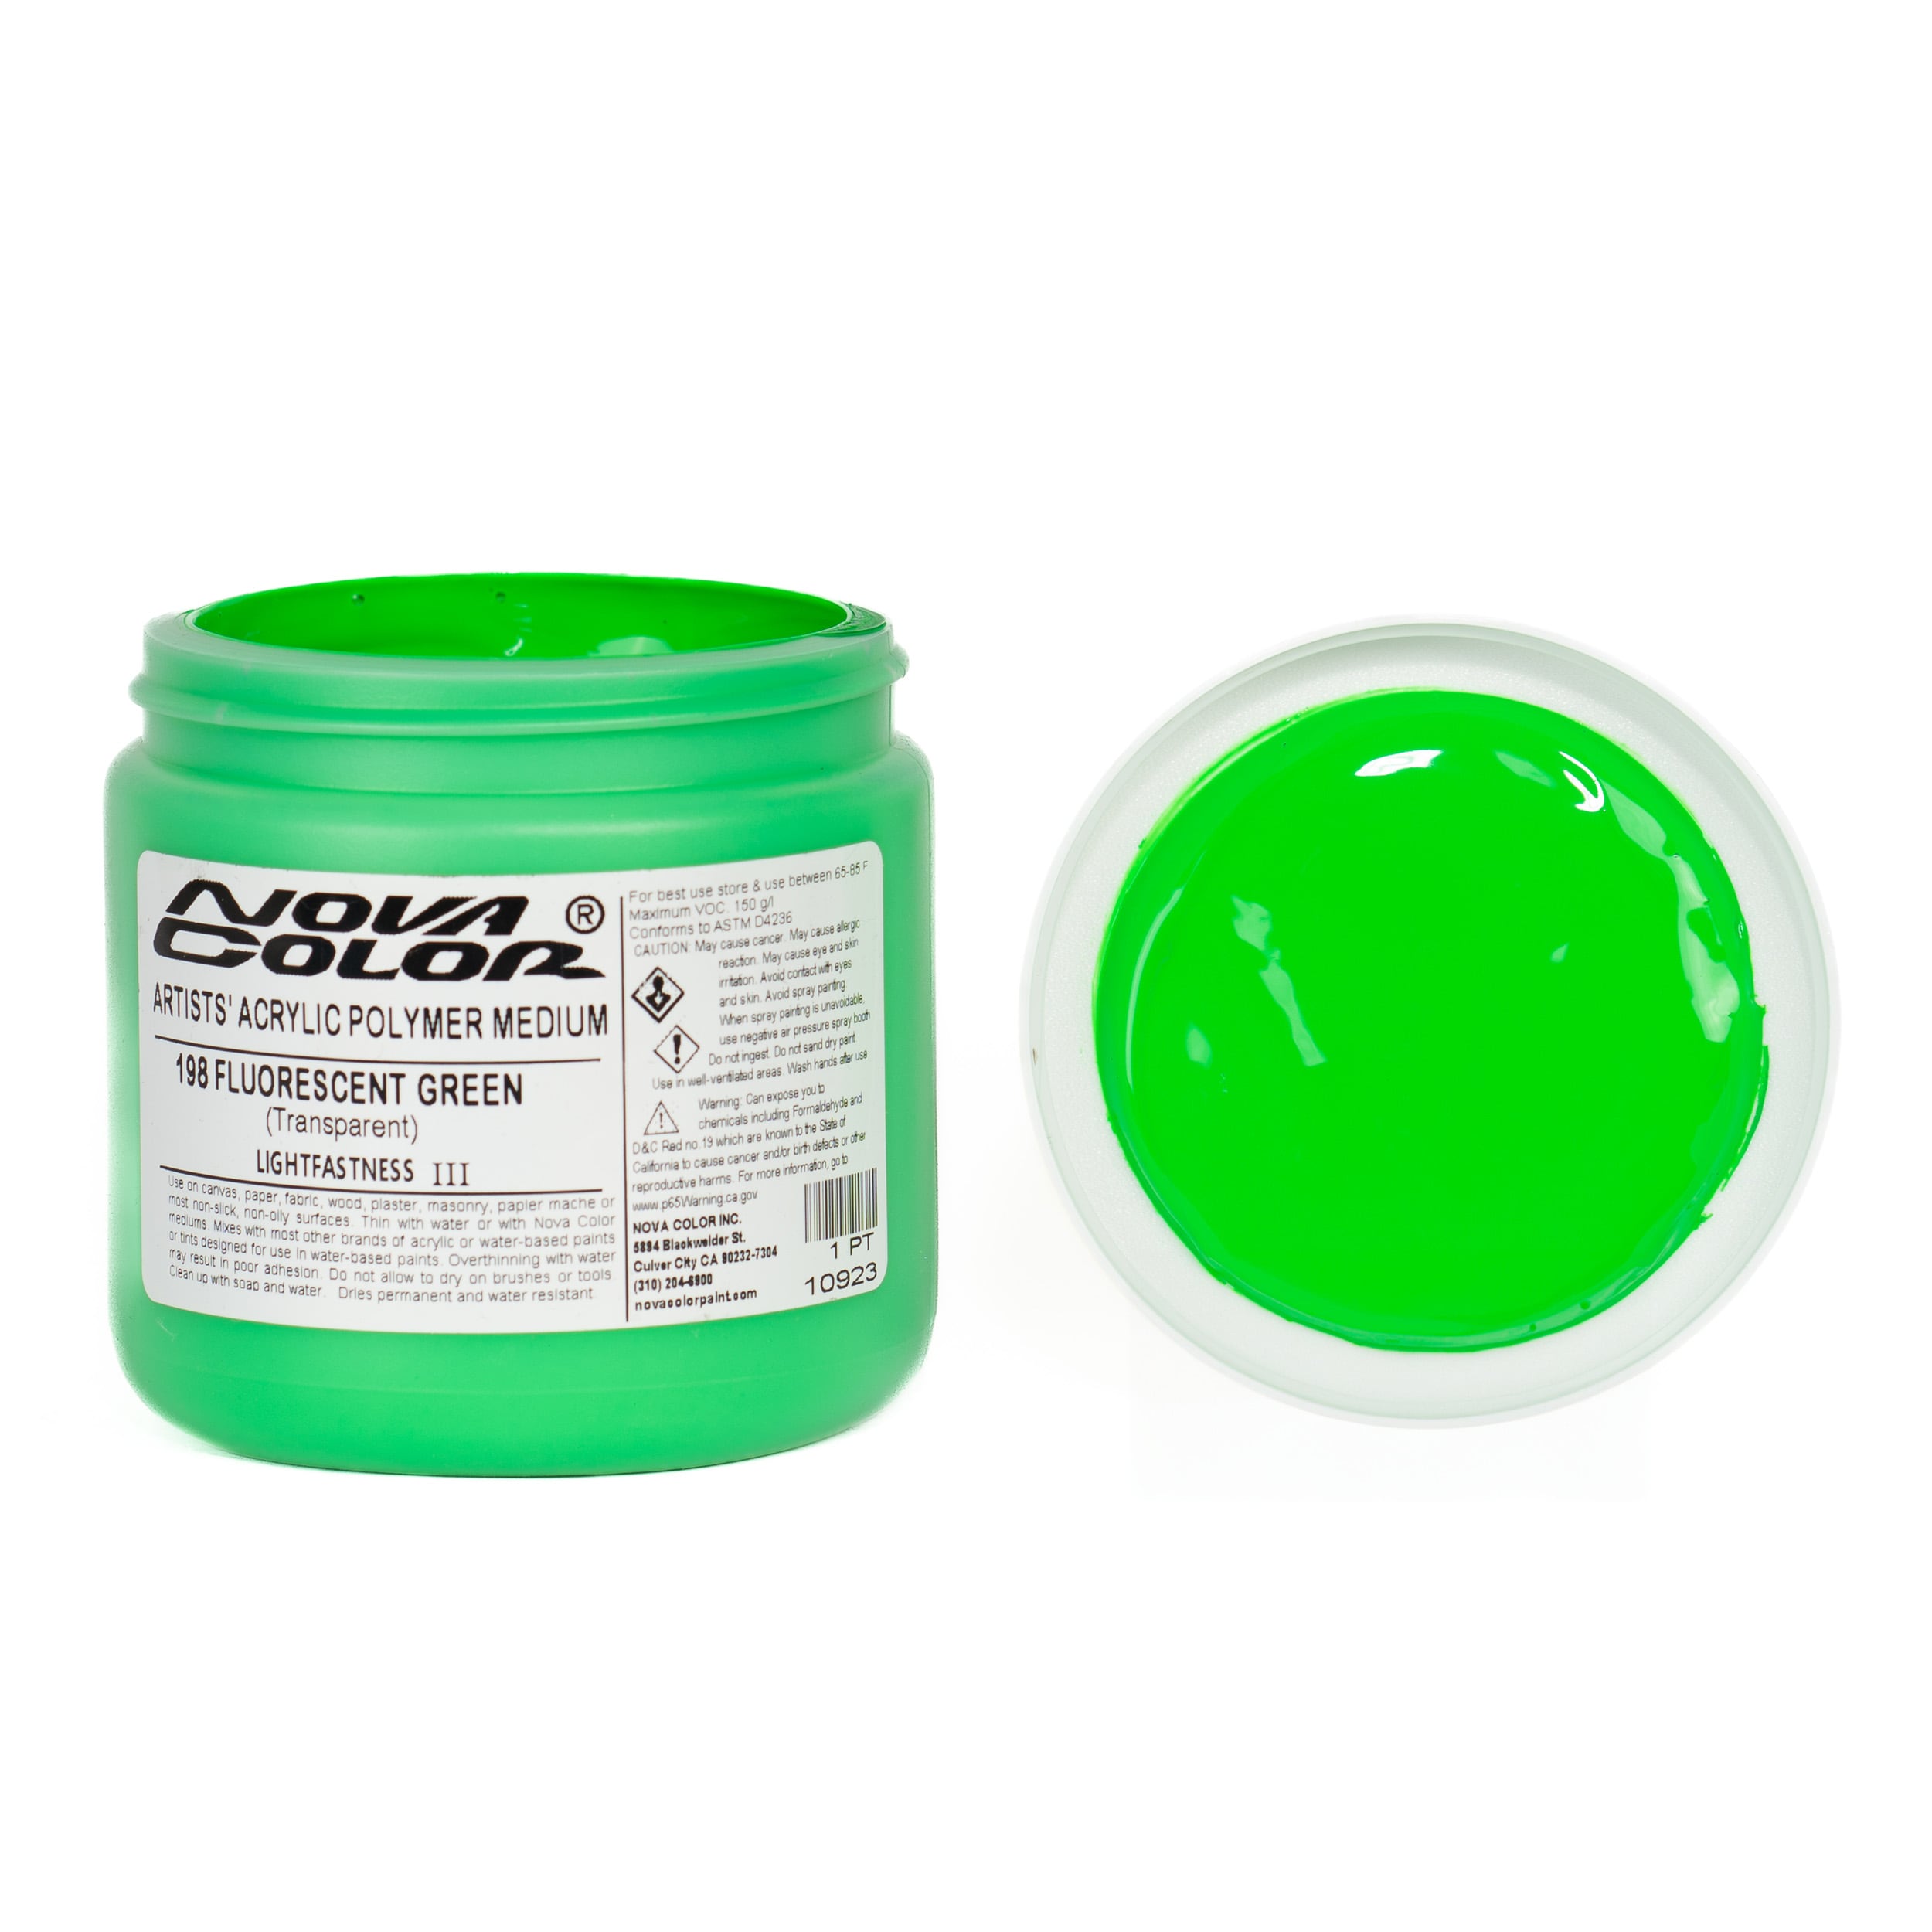 Buy #198 Fluorescent Green - Lightfastness:, - Transparent Online